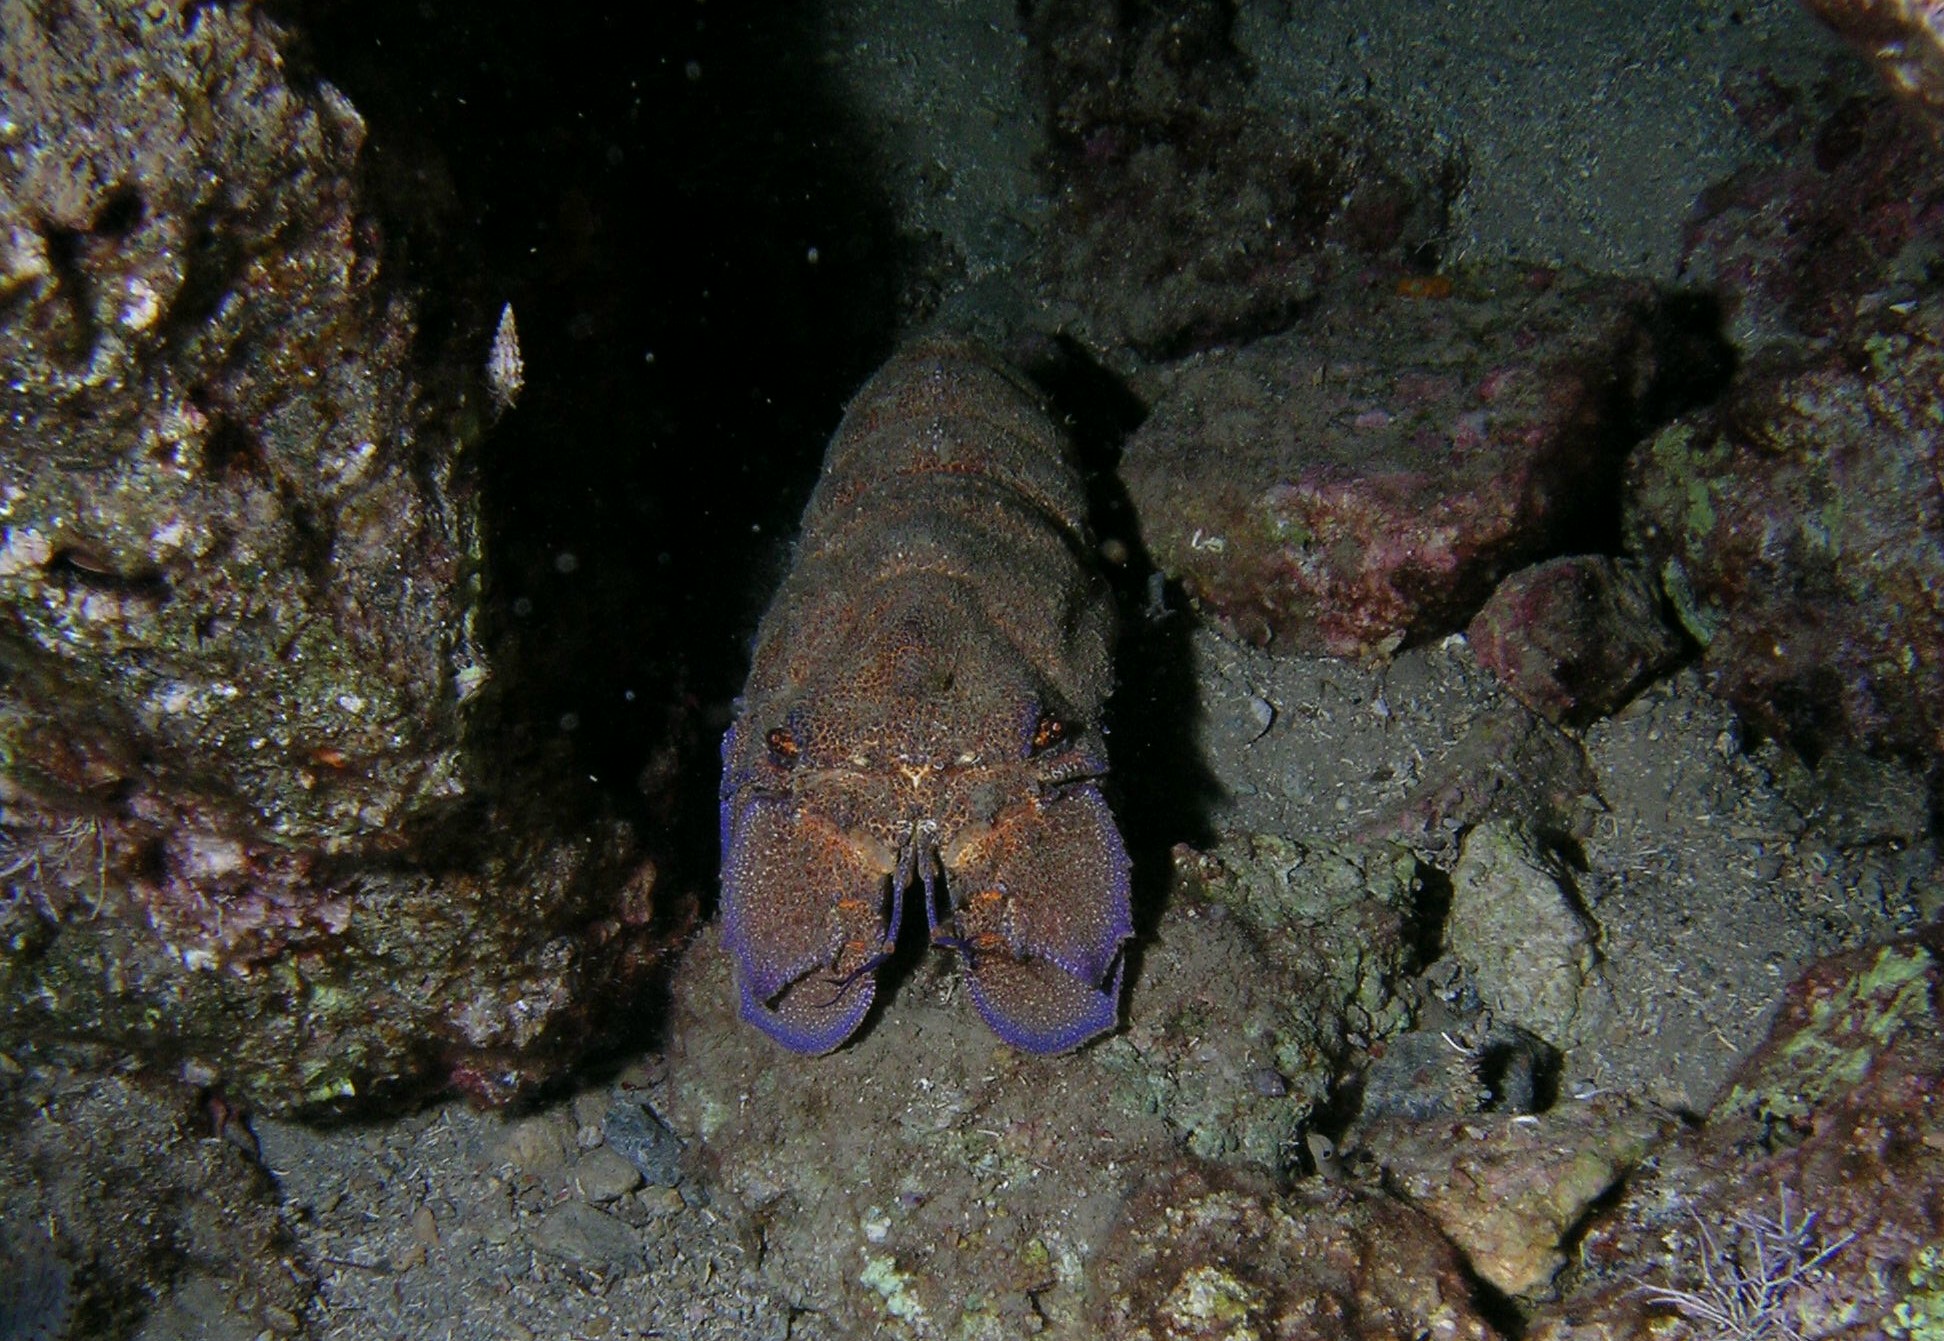 Locust (slipper) lobster,night dive.